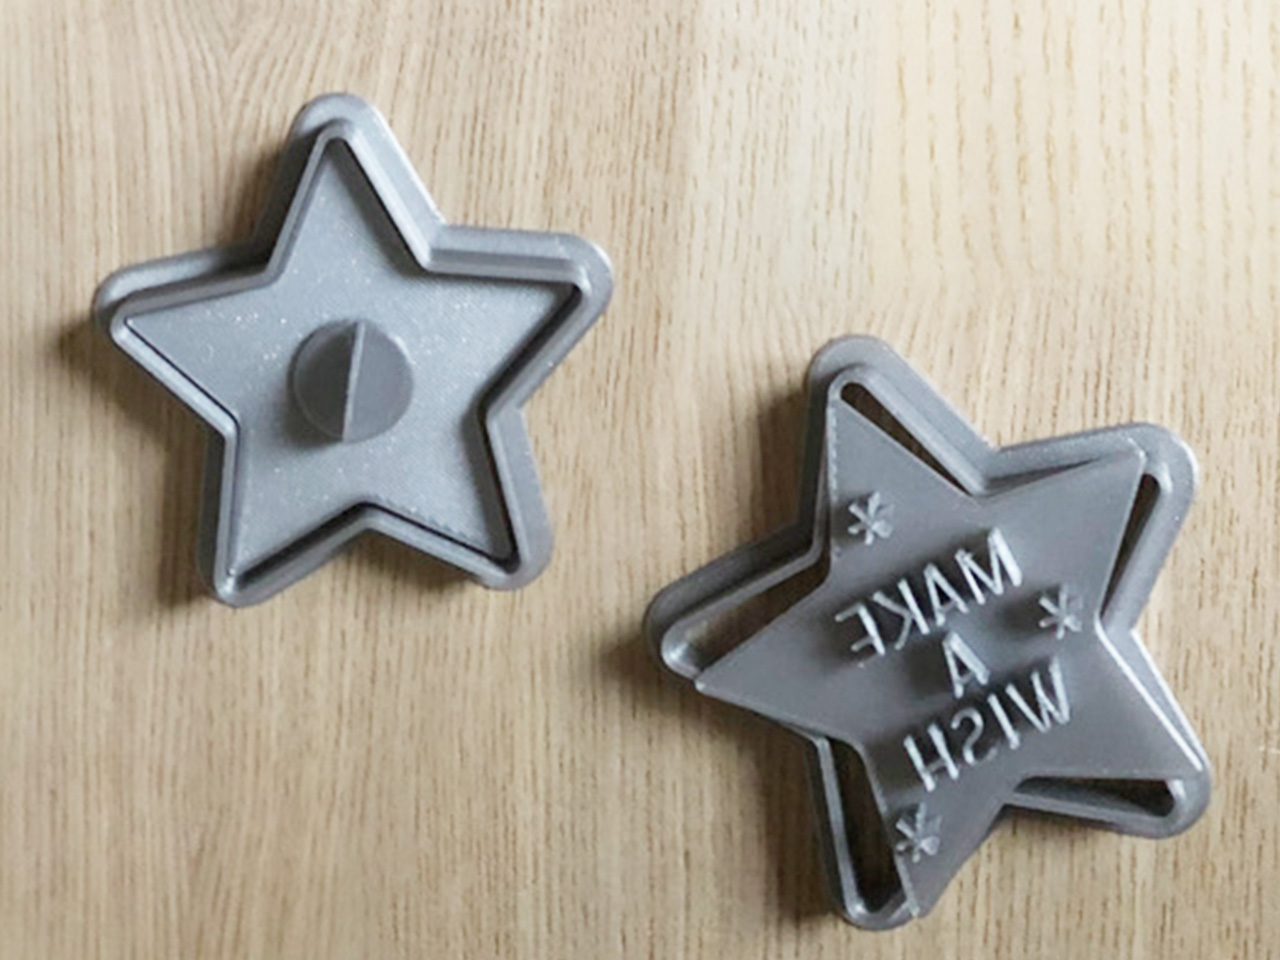 Make a wish - Star cookie cutter